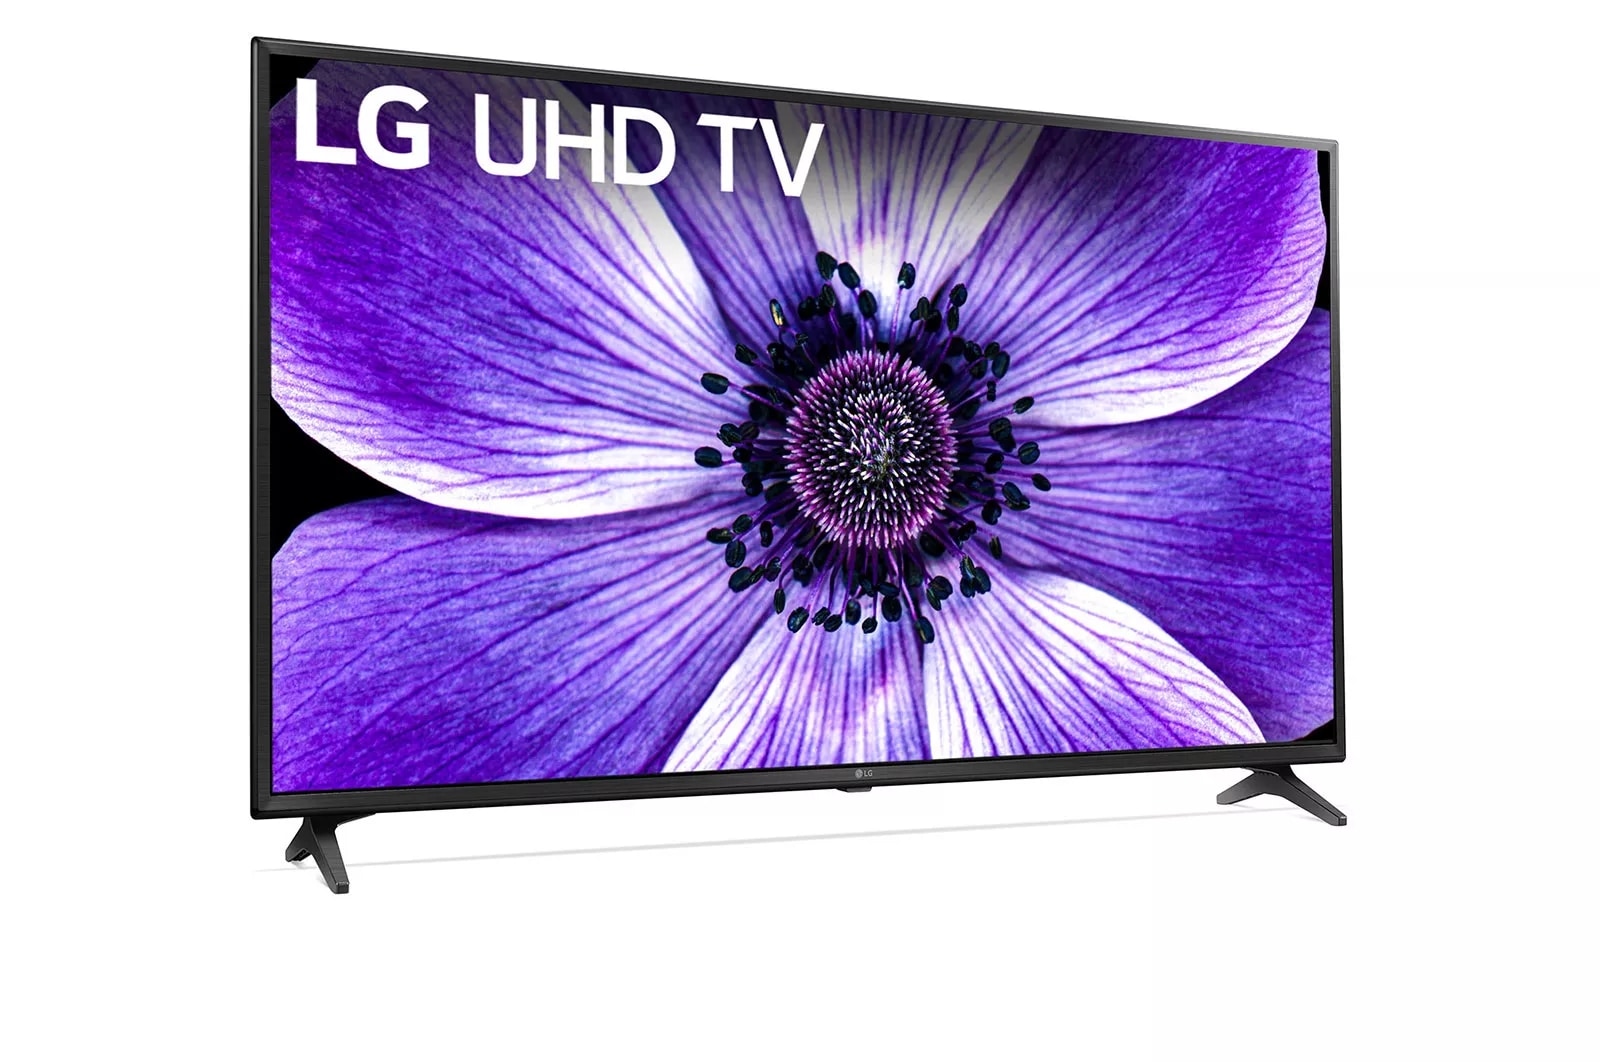 LG UN 43 inch 4K Smart UHD TV (43UN6950ZUA) | LG USA